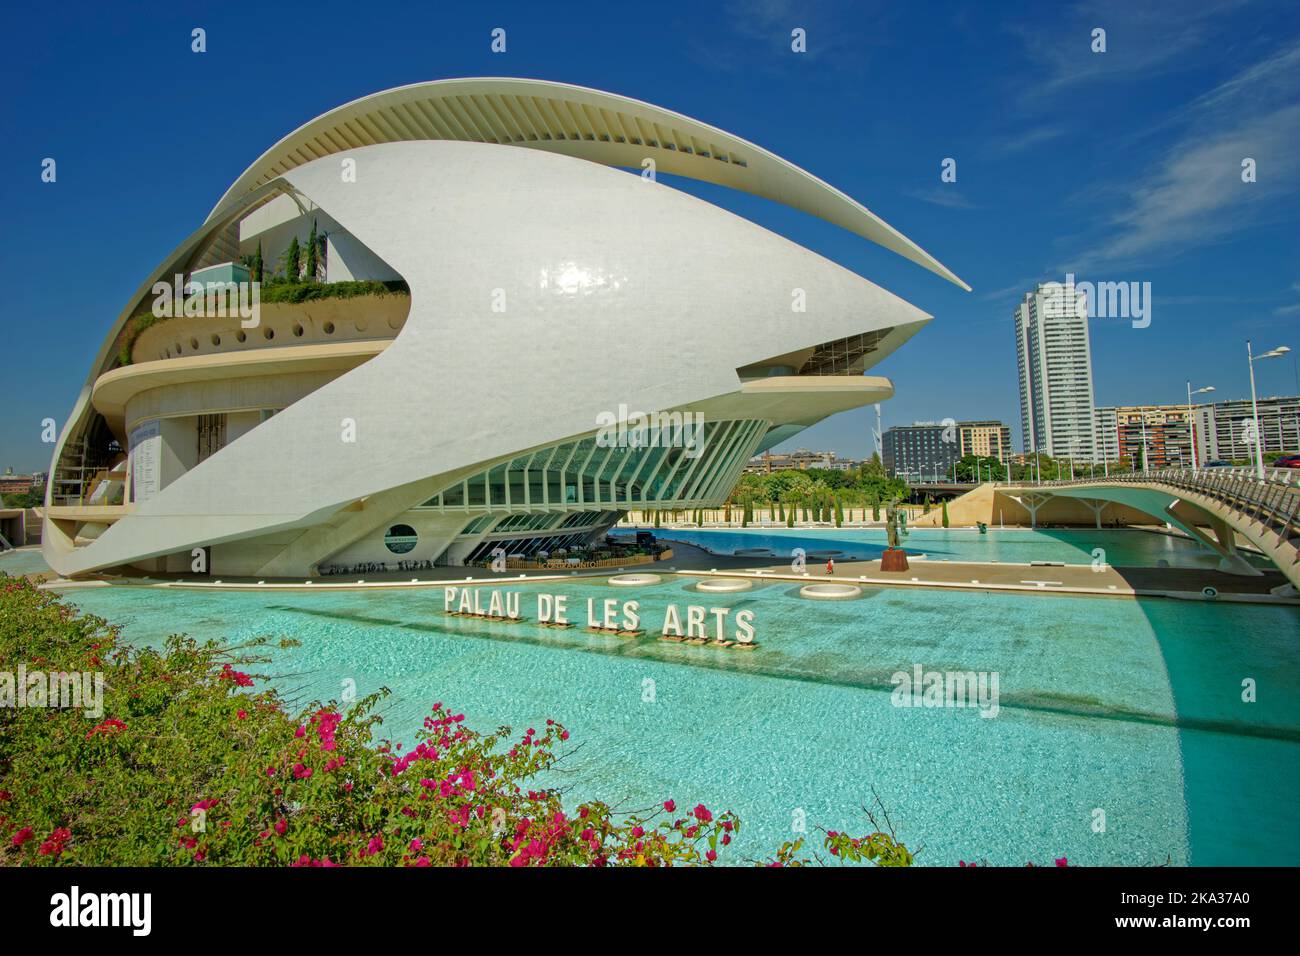 Palau de les Arts Reina Sofia, Palast der Künste in der Stadt Valencia, Provinz Valencia, Spanien. Stockfoto